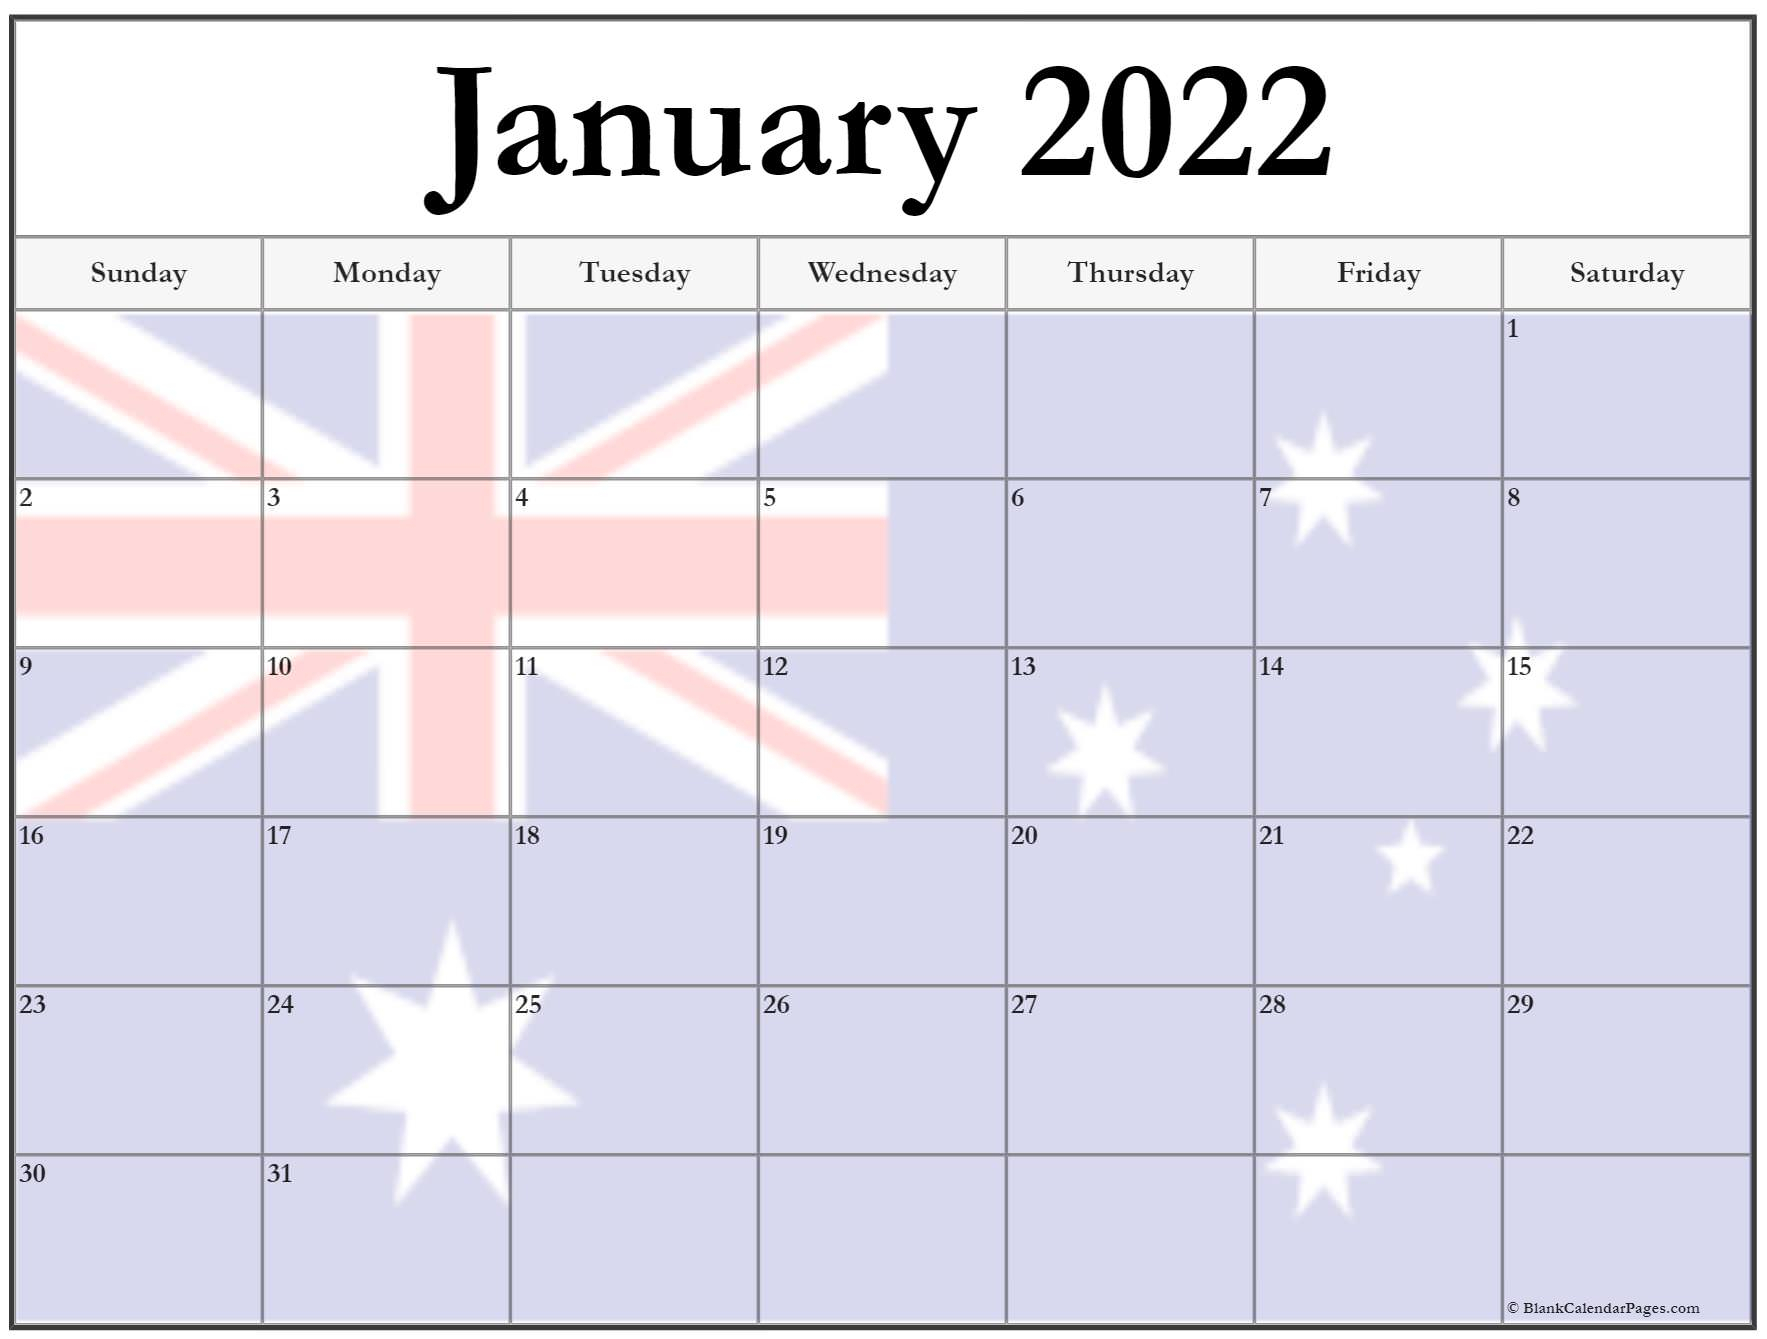 Take 2022 January Calendar Images